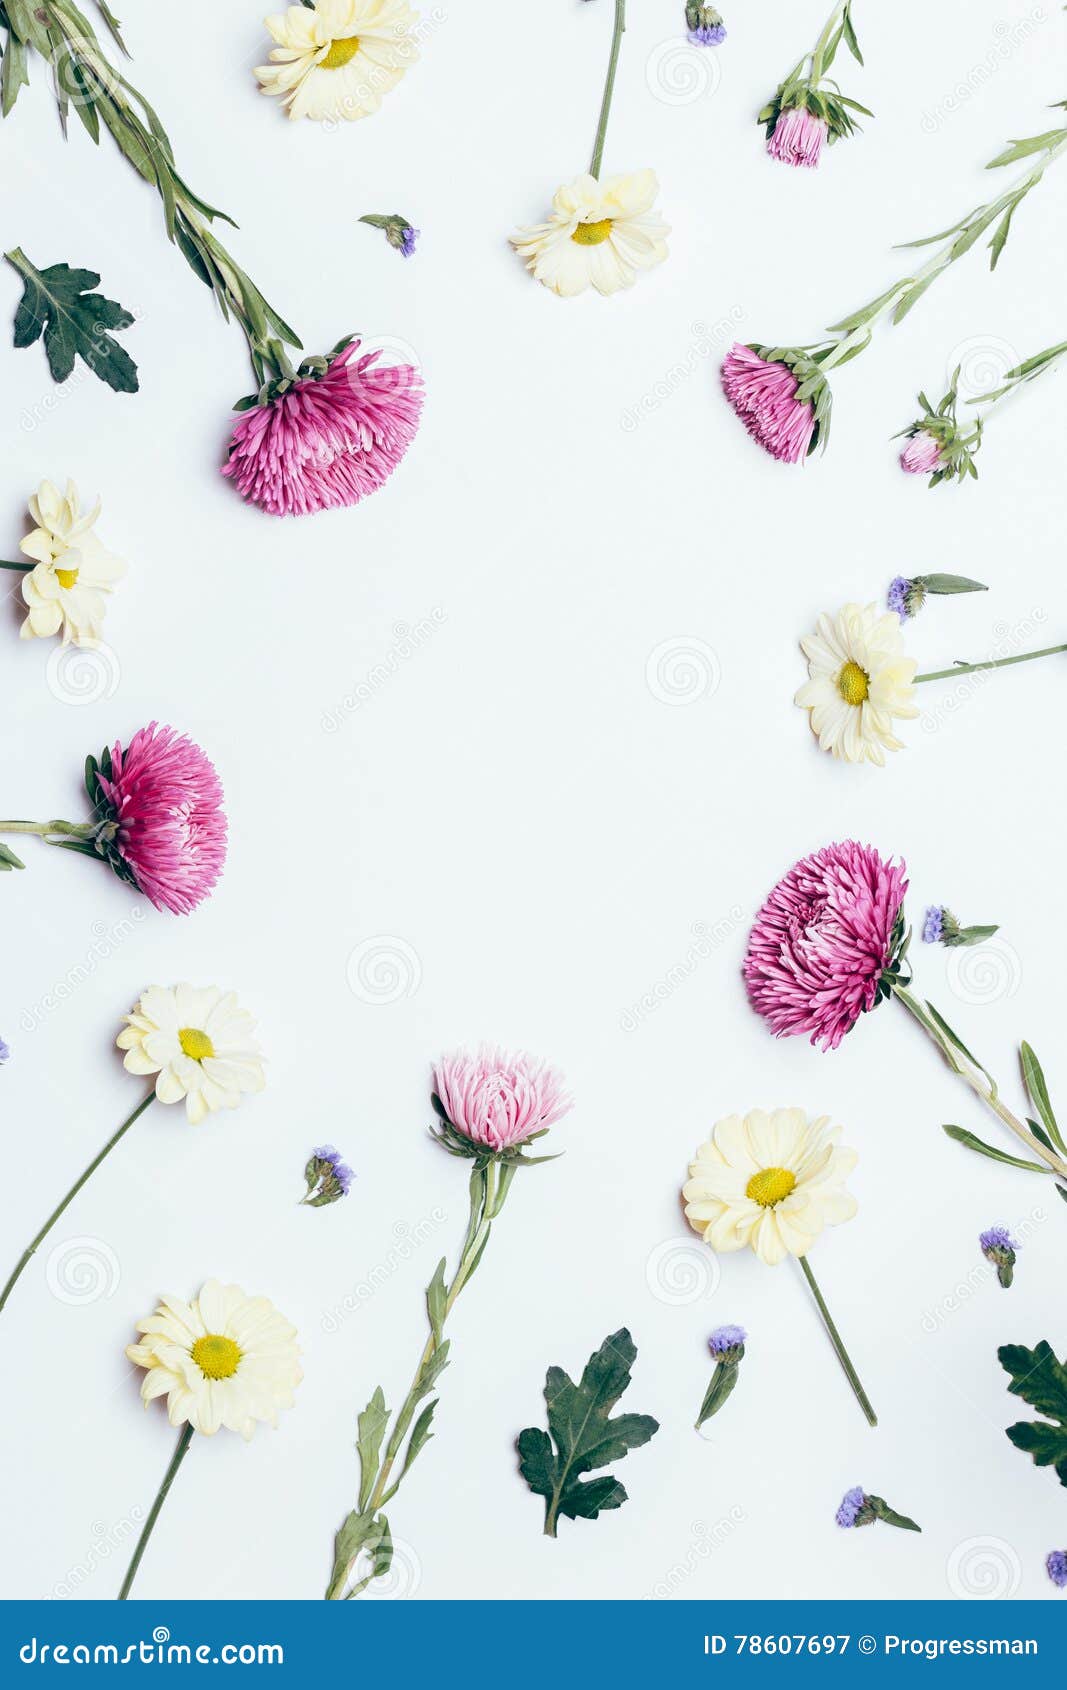 Flower Arrangement Top View Stock Photos - Download 20,835 Royalty Free ...